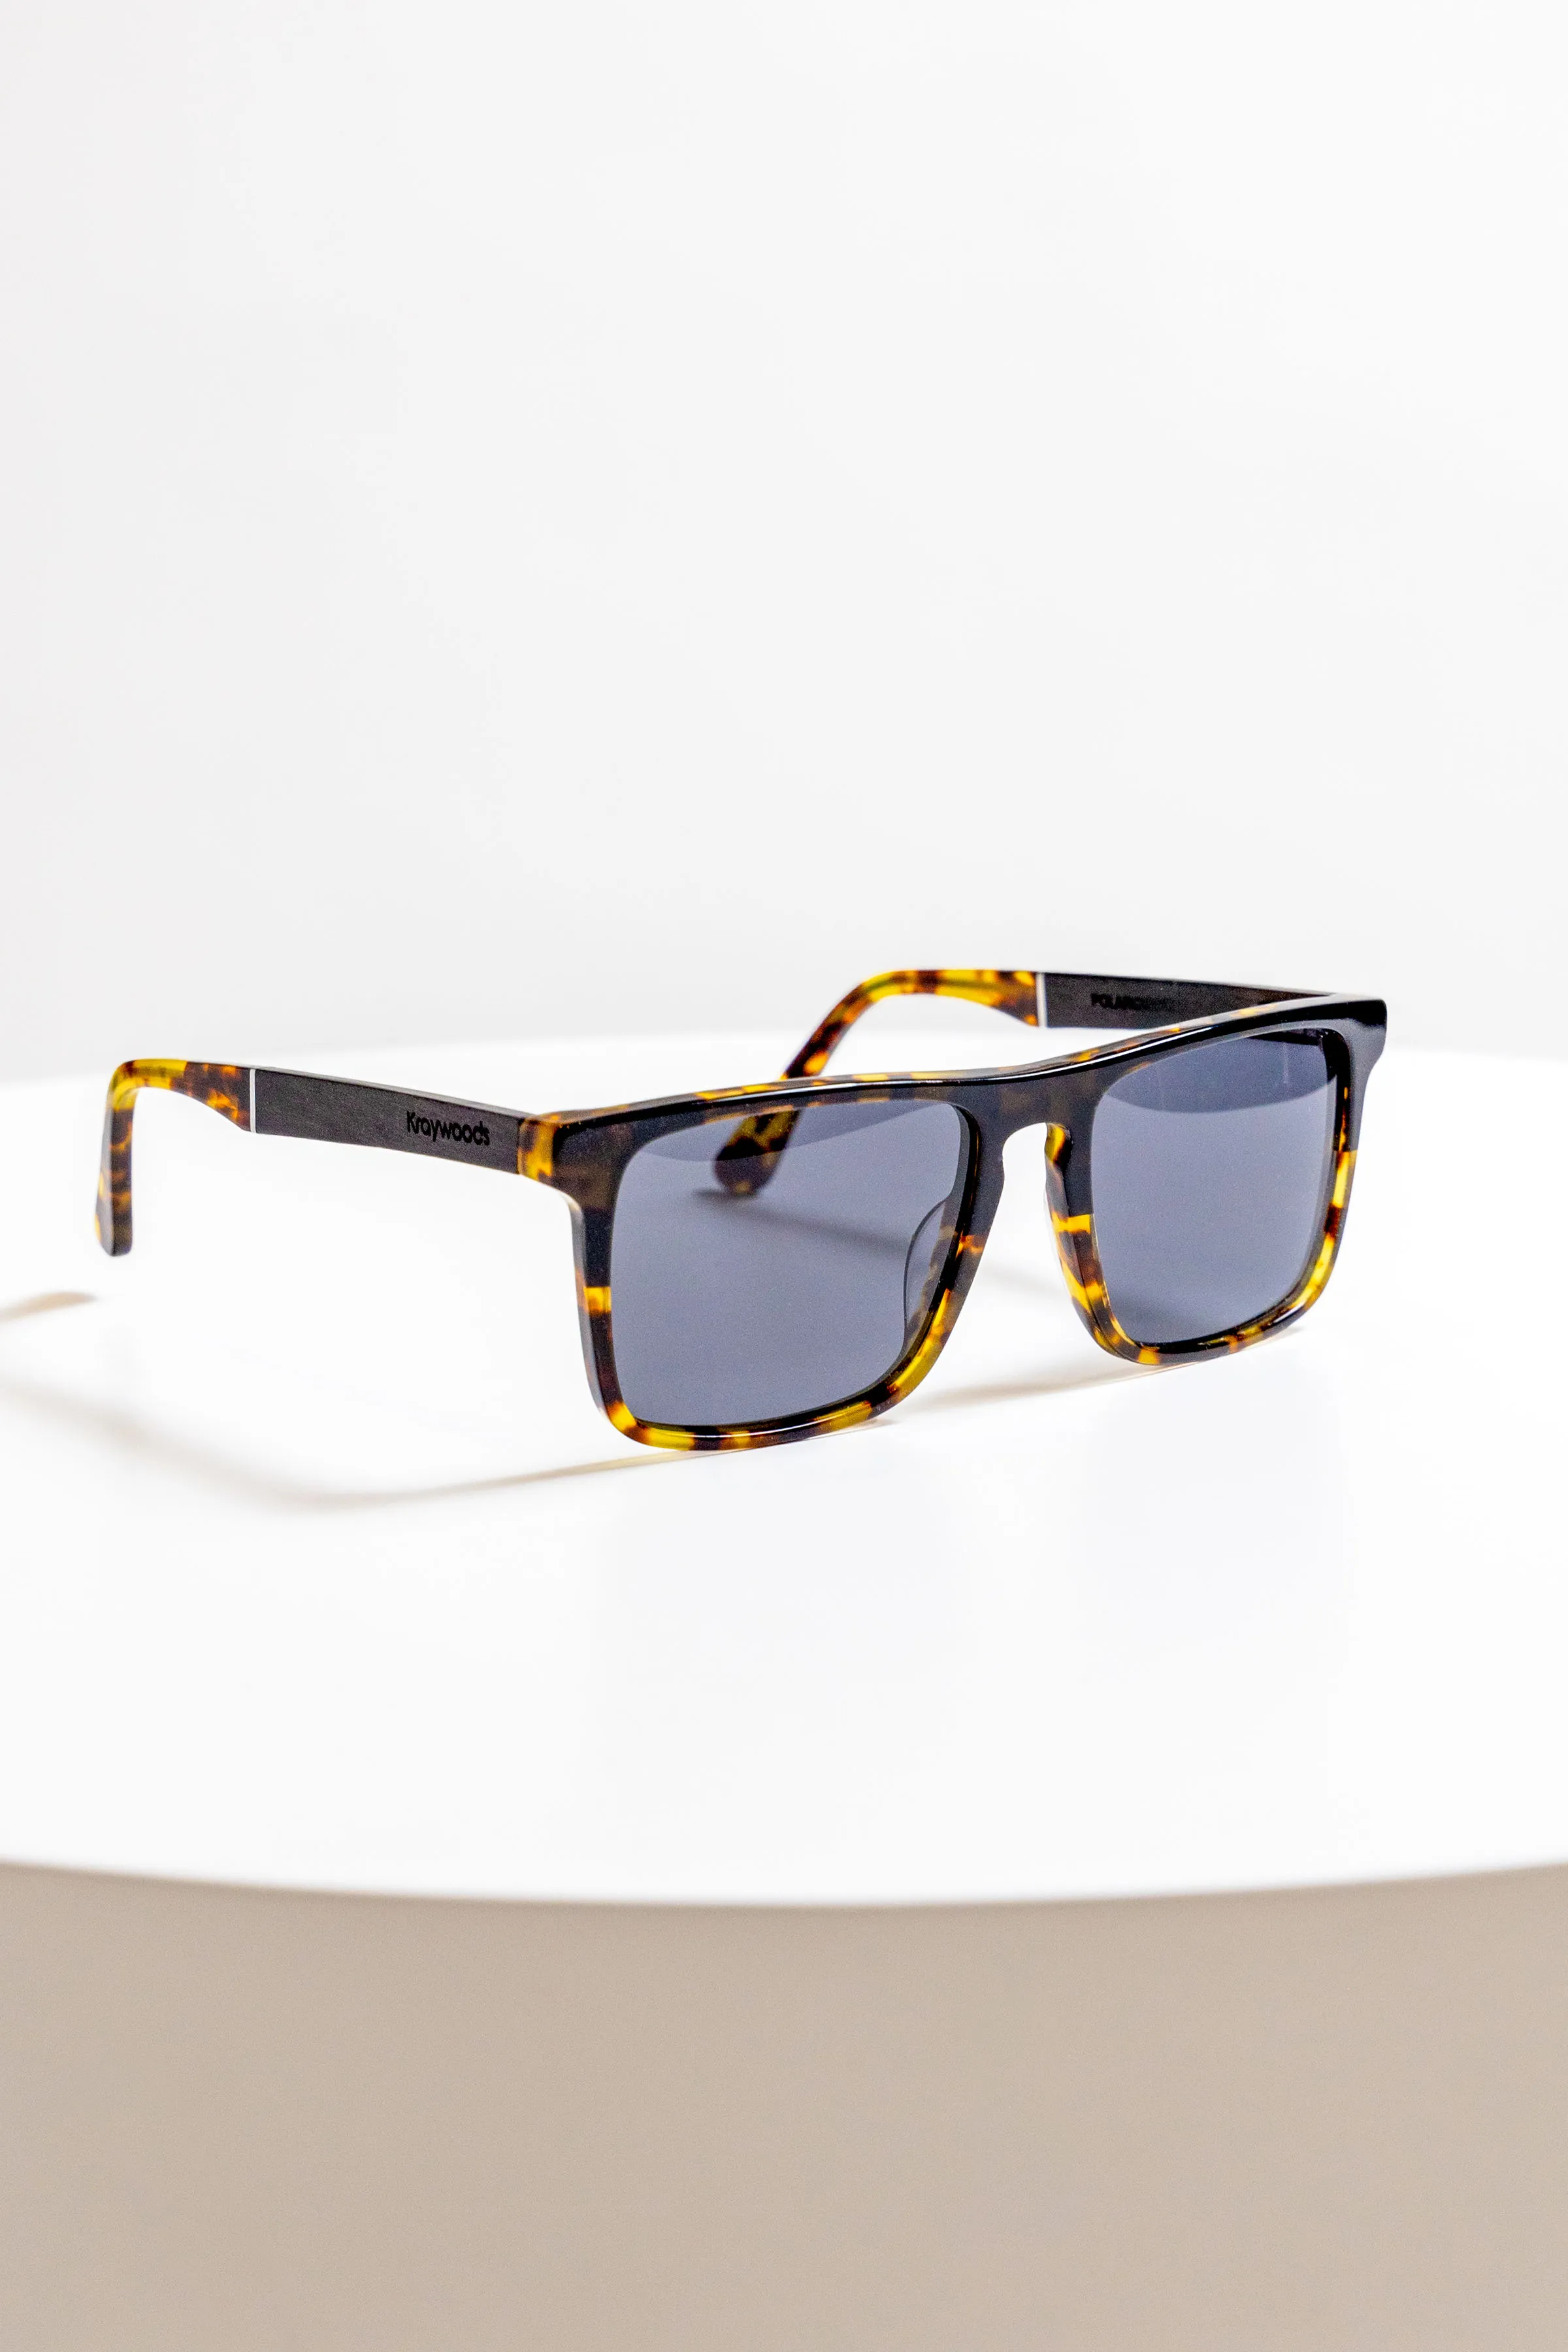 Felix sunglasses by Kraywoods